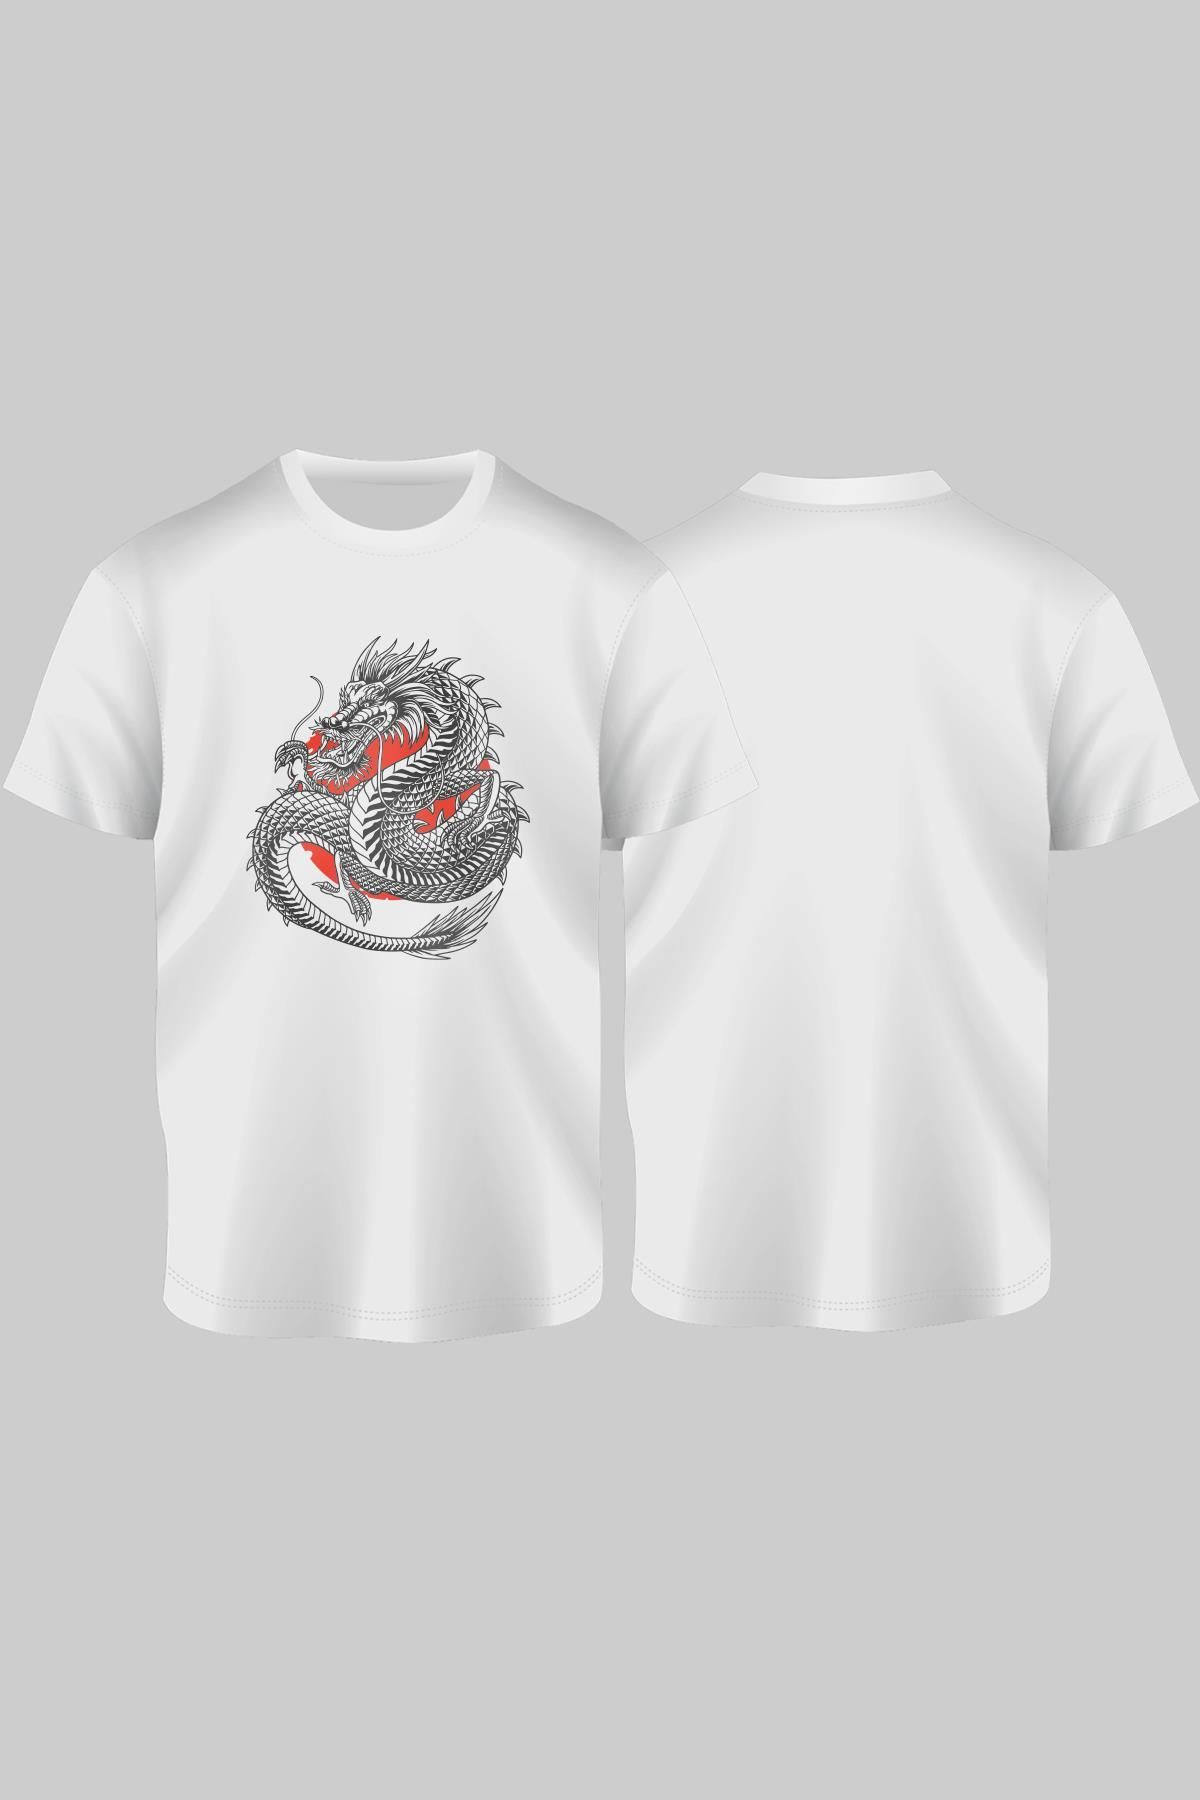 TSHIRT35 Dragon Baskılı Beyaz Unisex Tişört